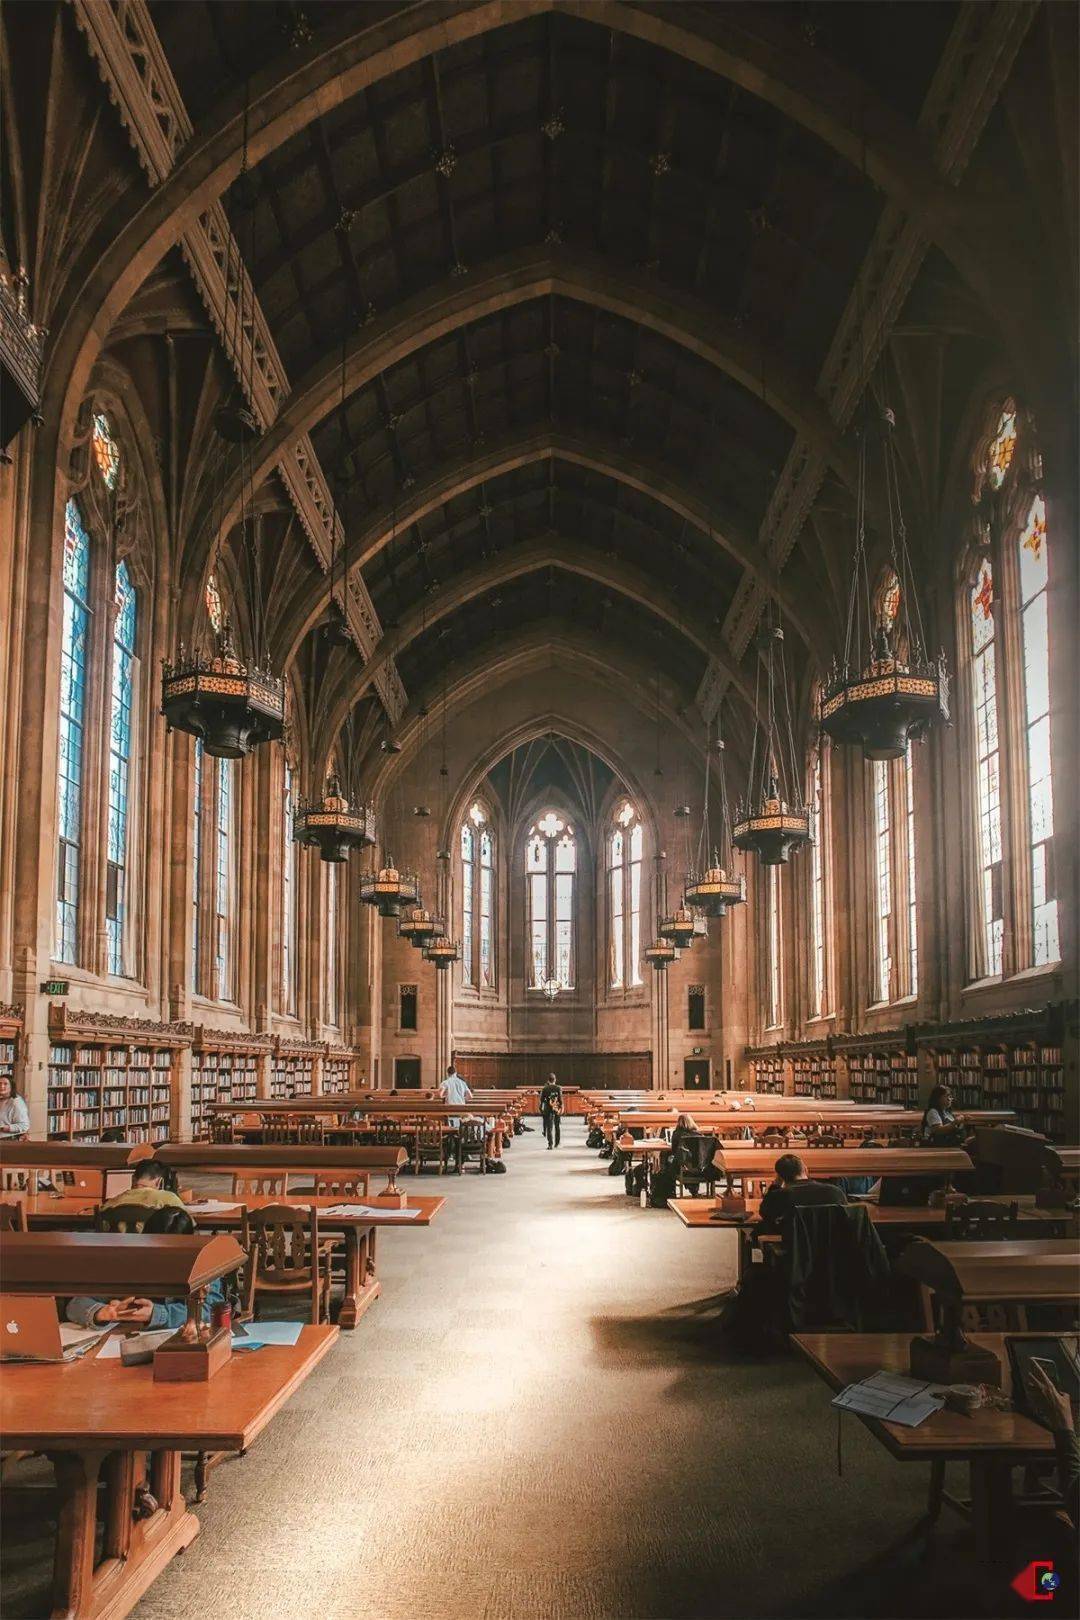 Δ 美国华盛顿大学苏塞罗图书馆阅览室,长76米,宽16米,高20米,可供